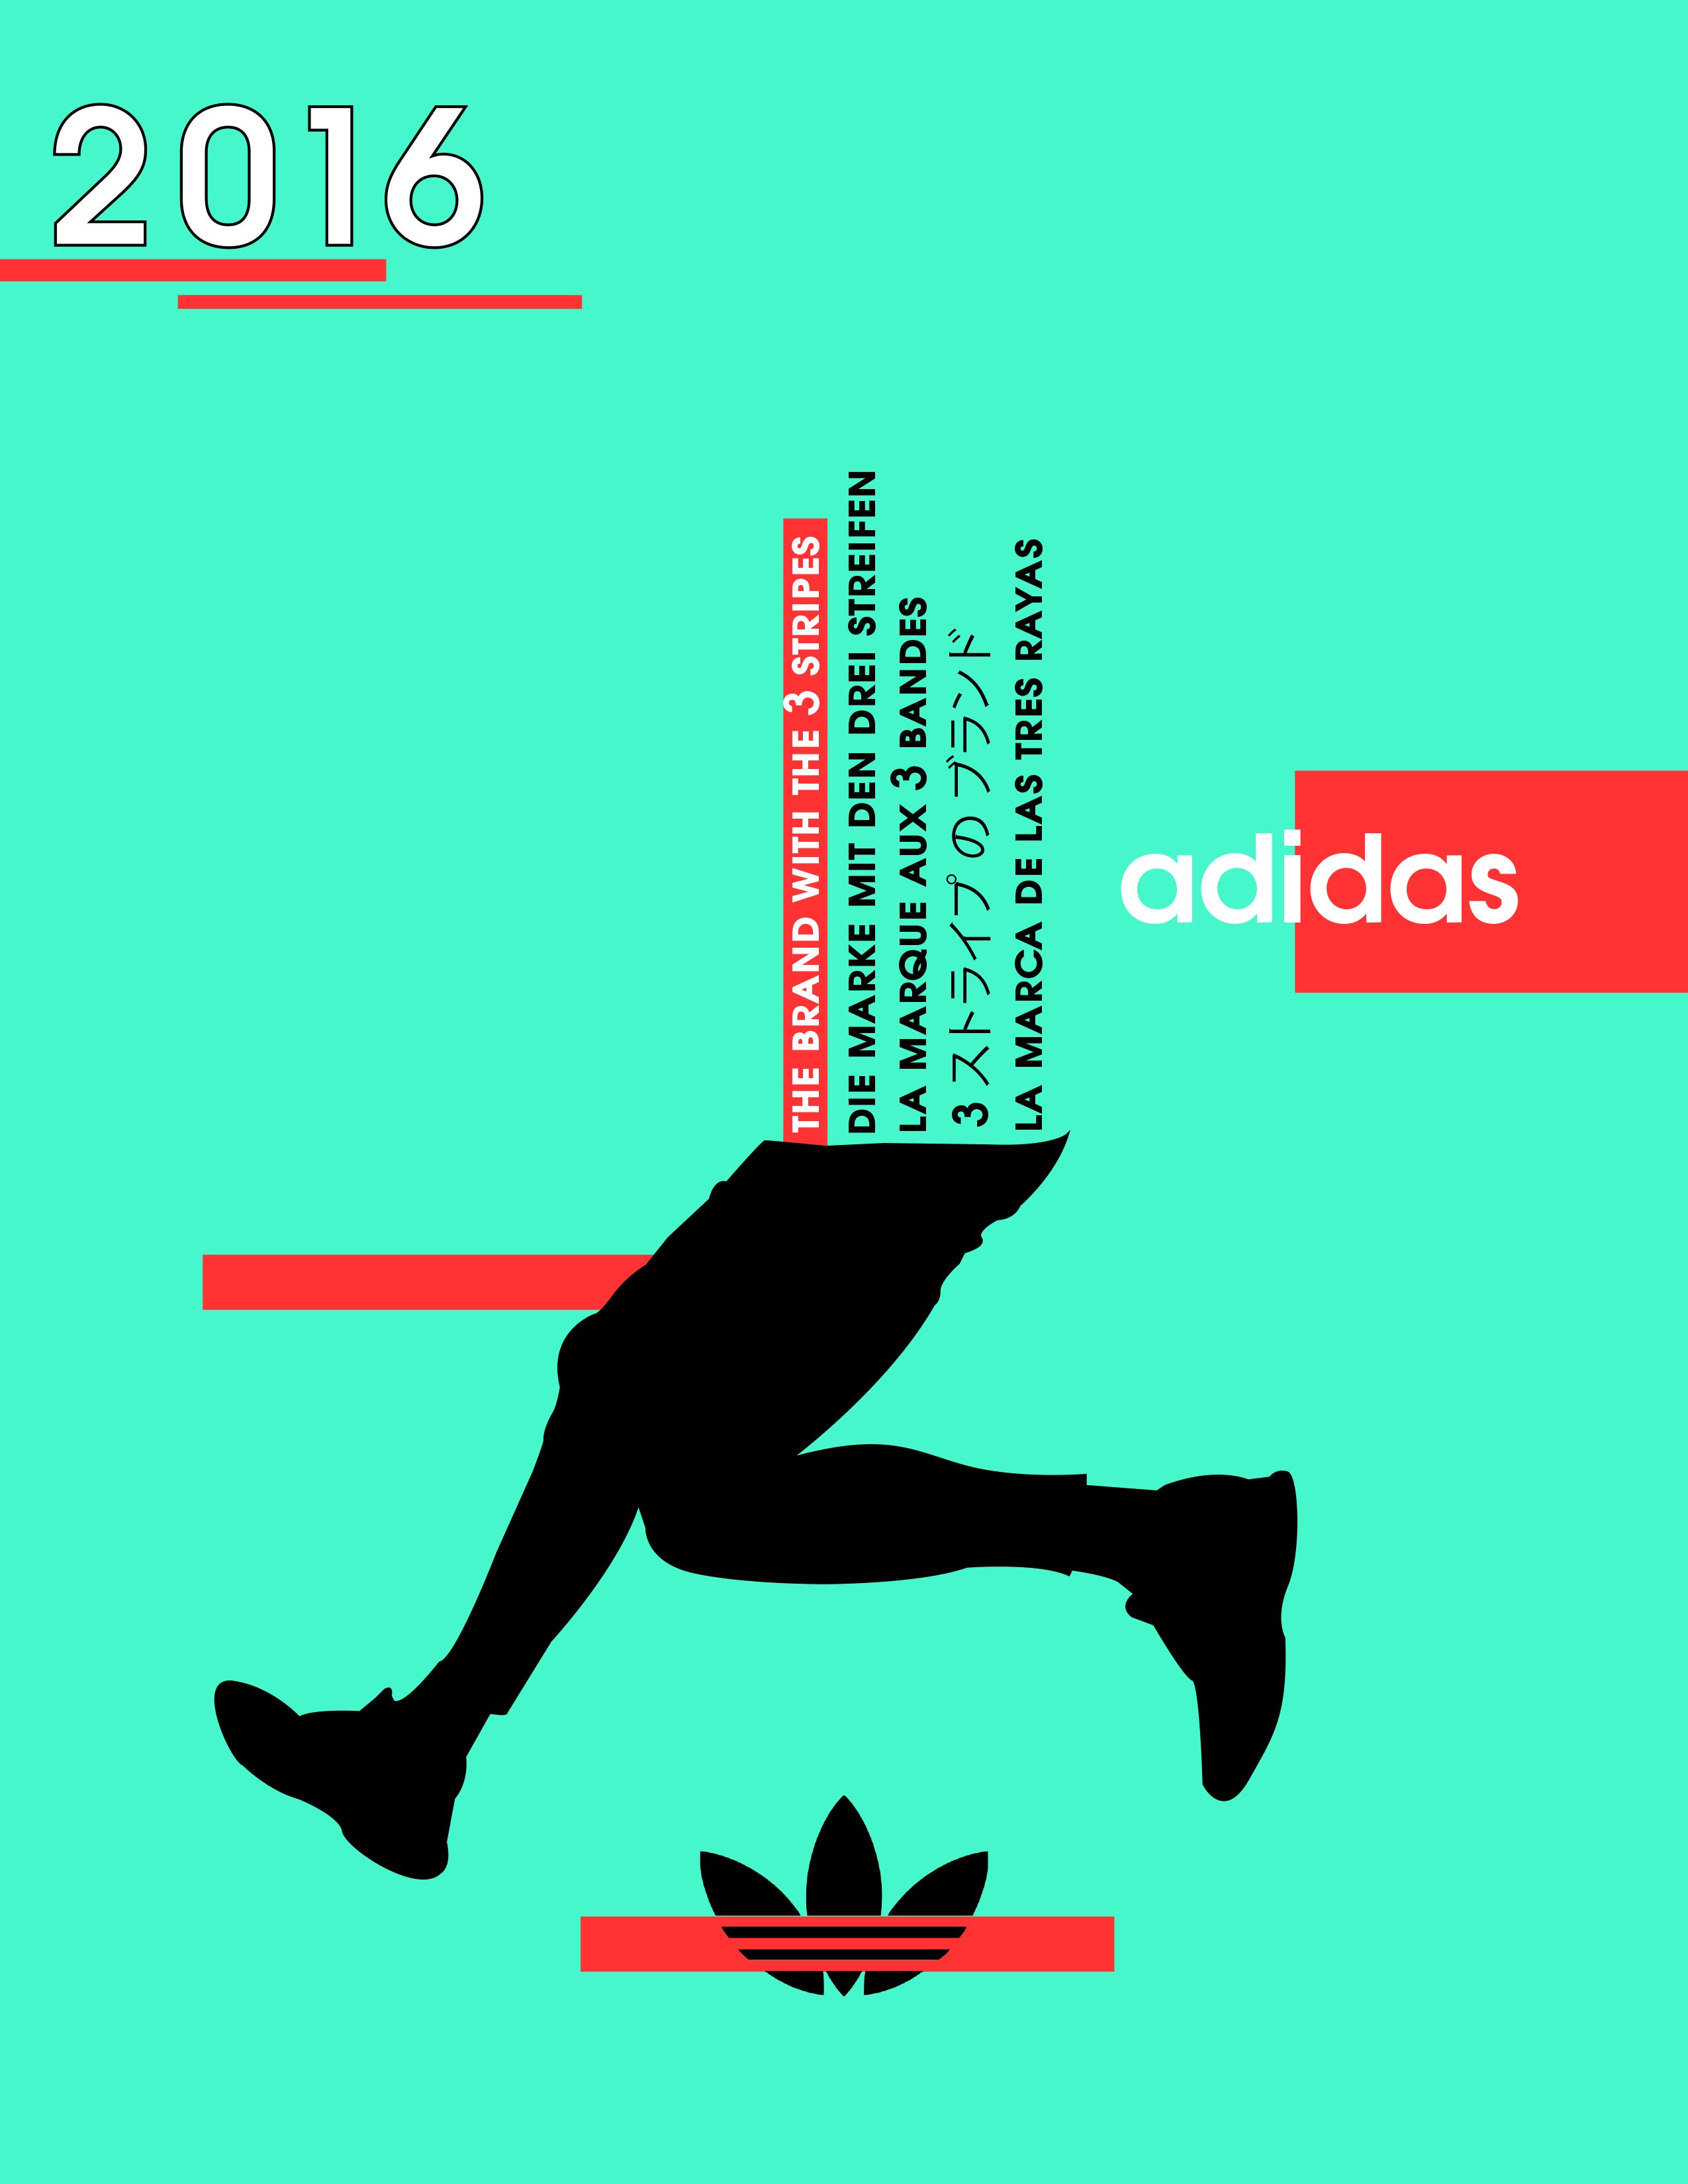 Case Study | Adidas 2016 Annual Report | by Monica Neumann | Medium